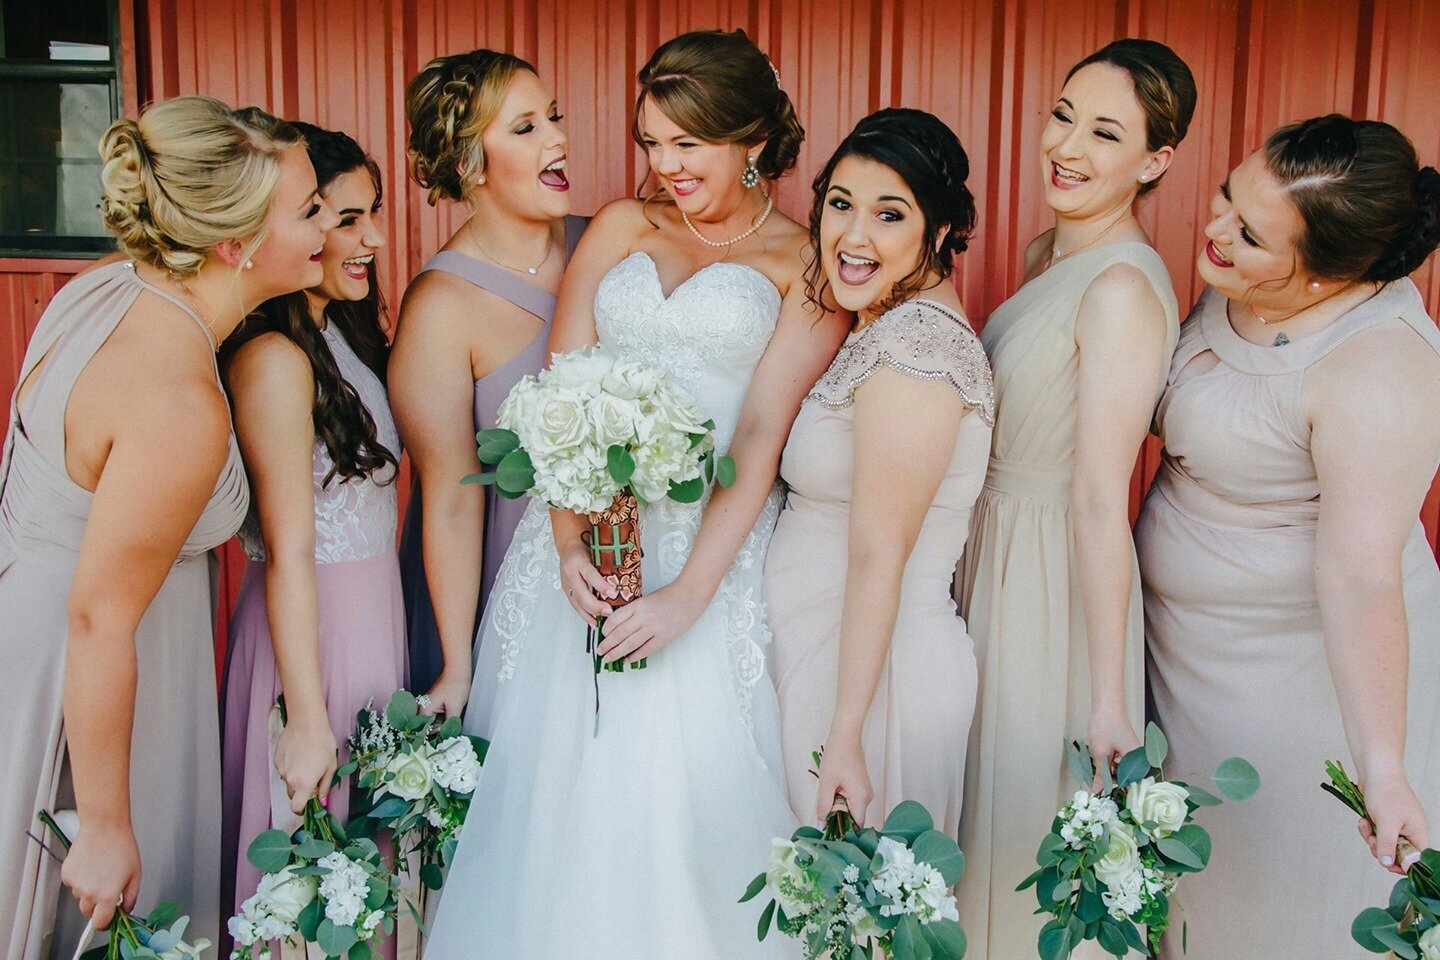 Bridesmaid hangout before the ceremony. ❤️⠀
&bull;⠀
&bull;⠀
&bull;⠀
&bull;⠀
#mooreranch #bridesmaids #texaswedding #texasbrides #collegestationphotographer #texasphotographer #weddingforward #bridesmaidgang #bridalparty #weddingdresses